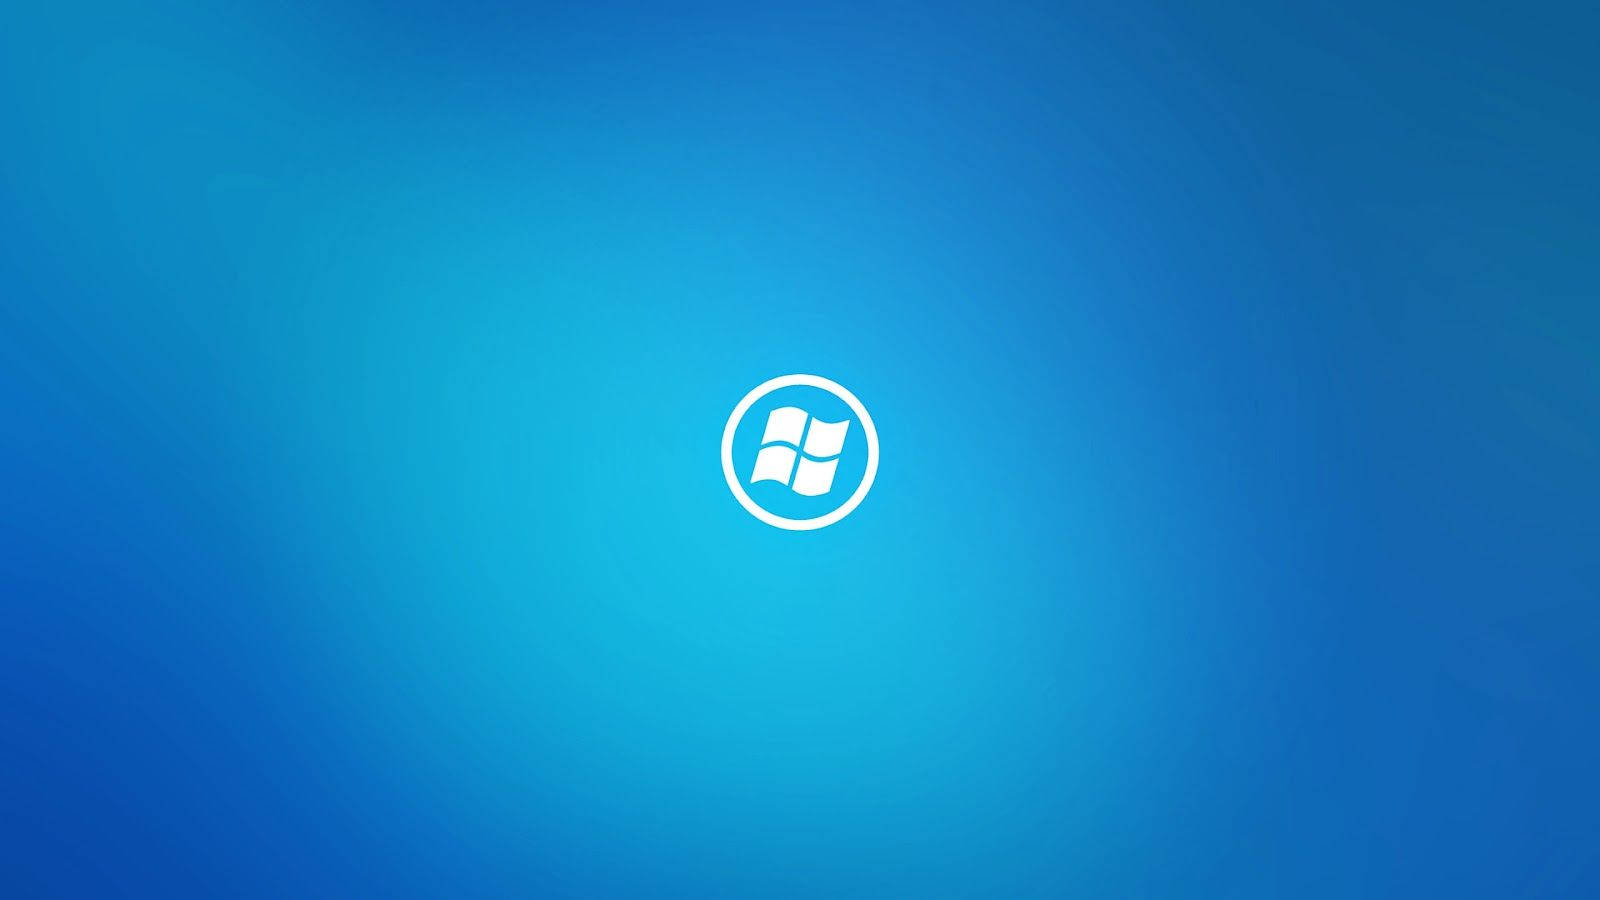 Windows 10 Hd Circle Logo